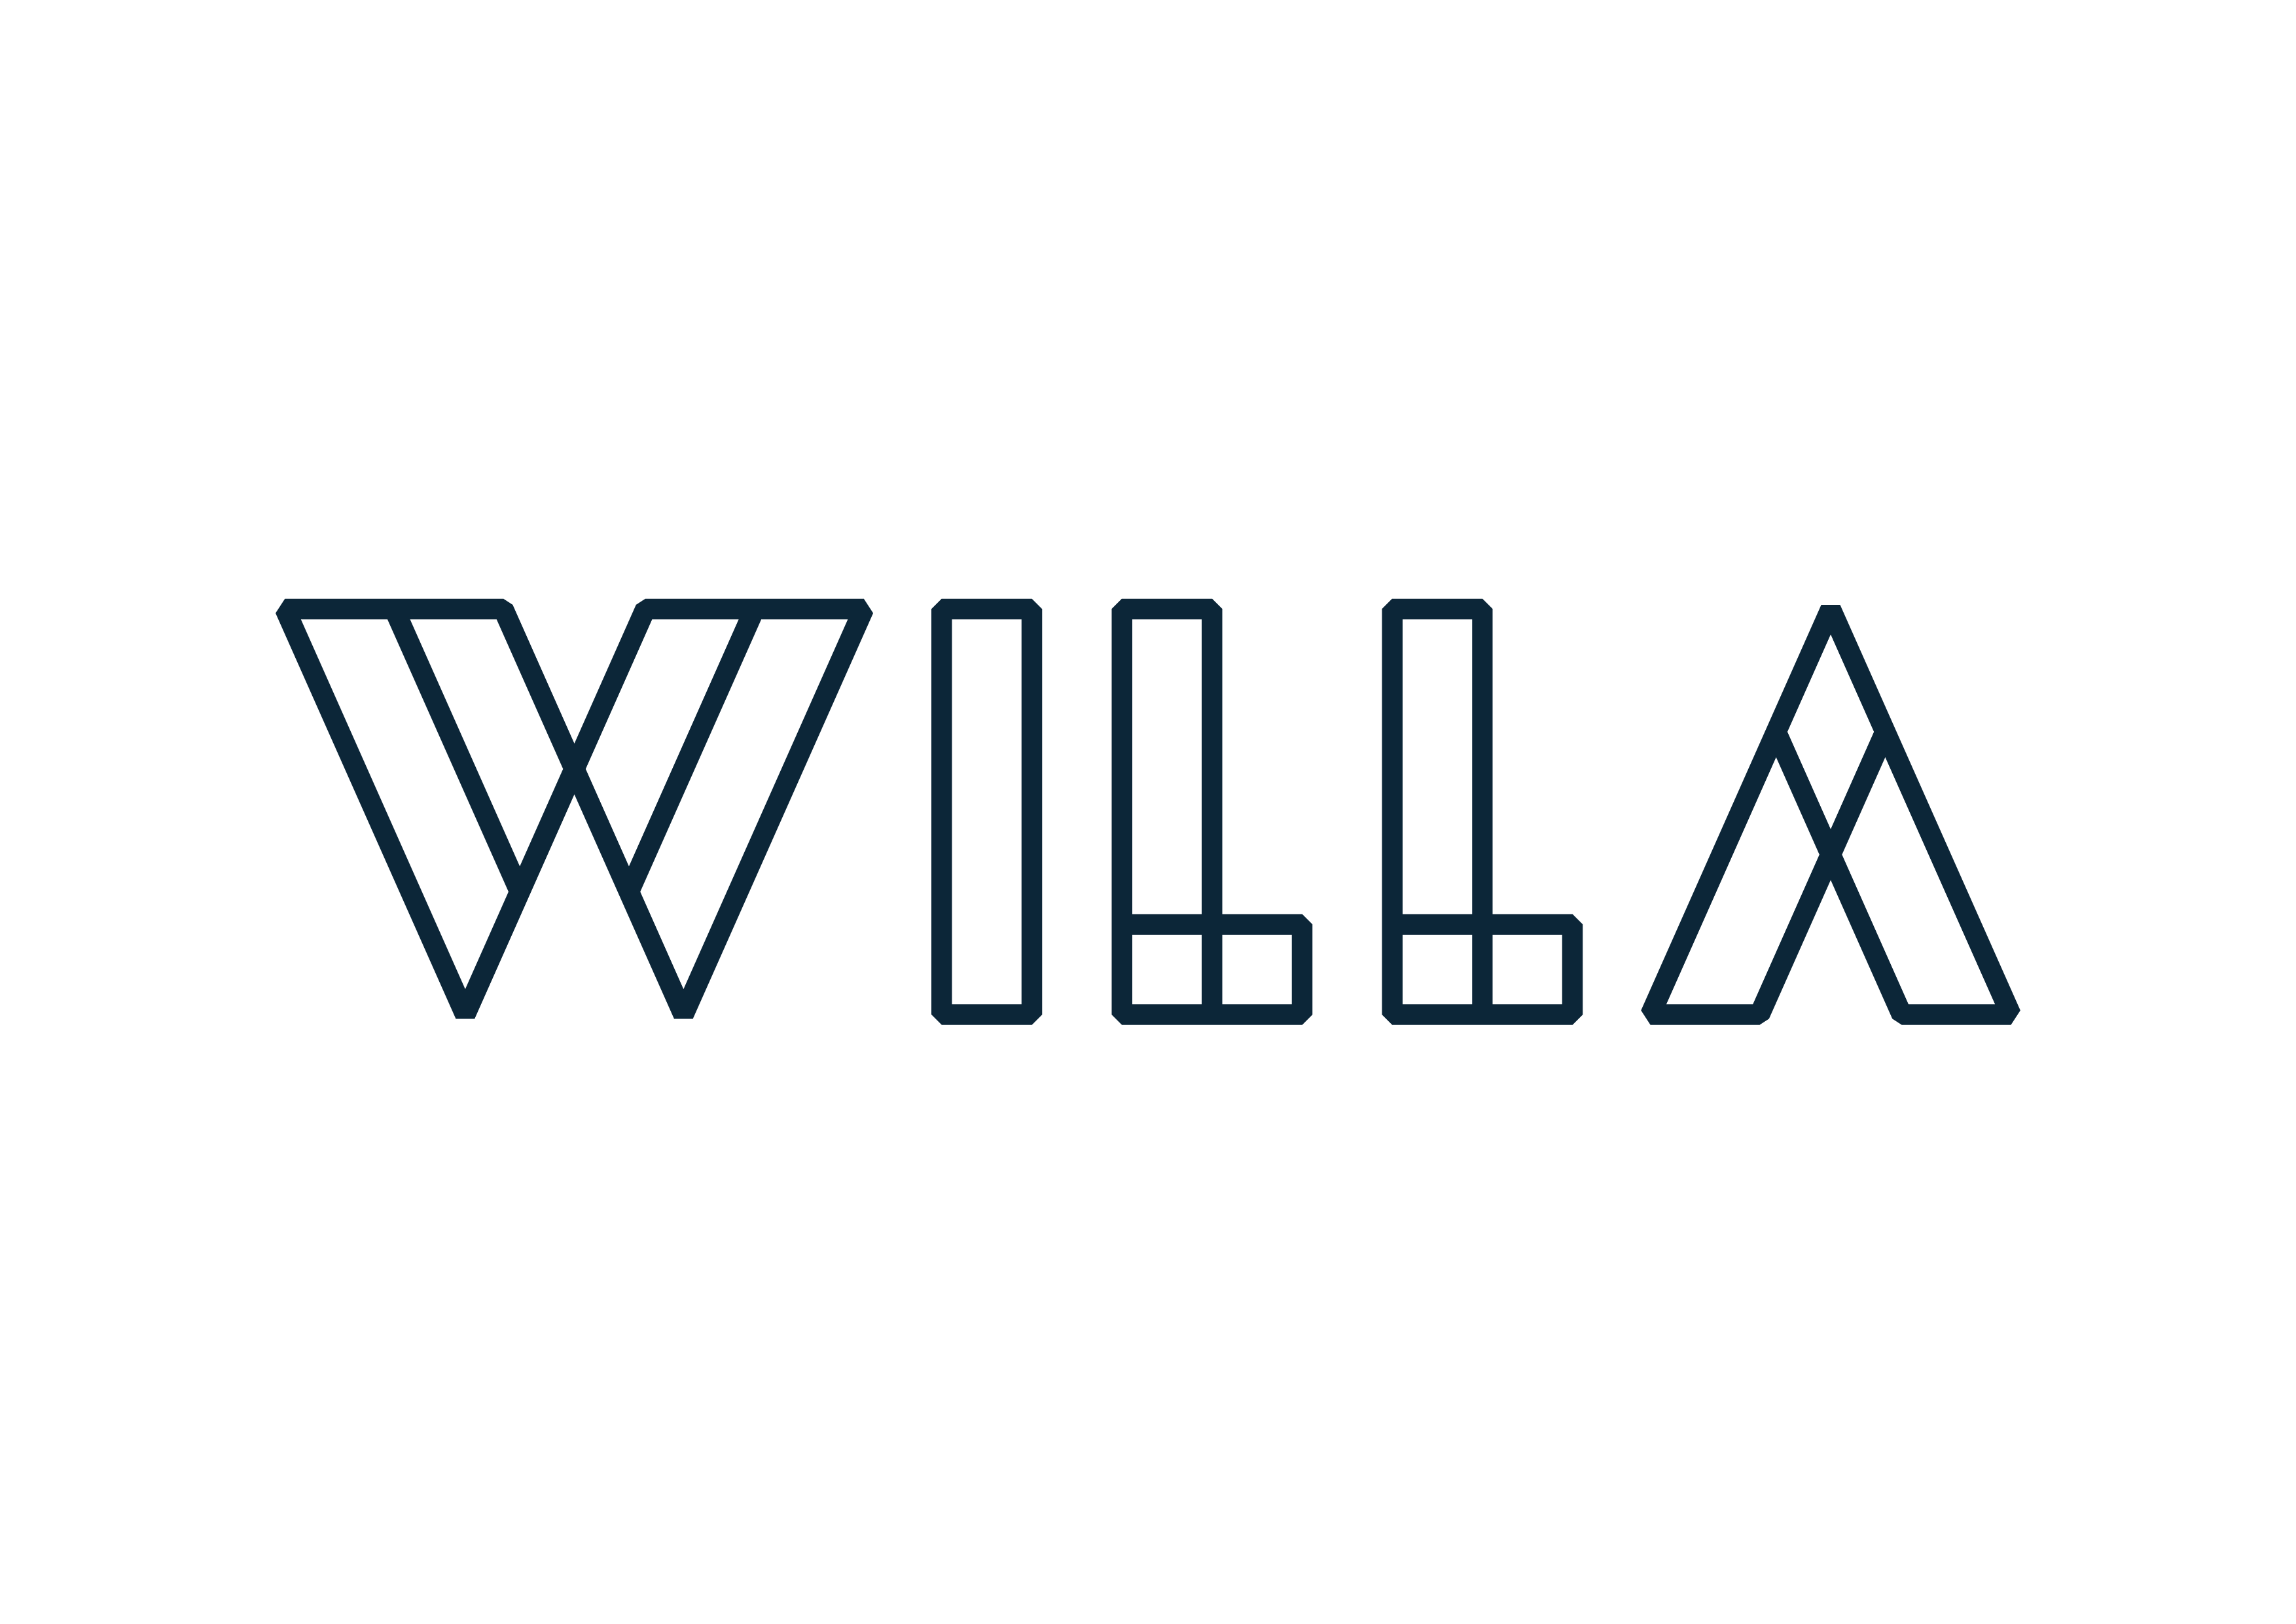 Willa logo